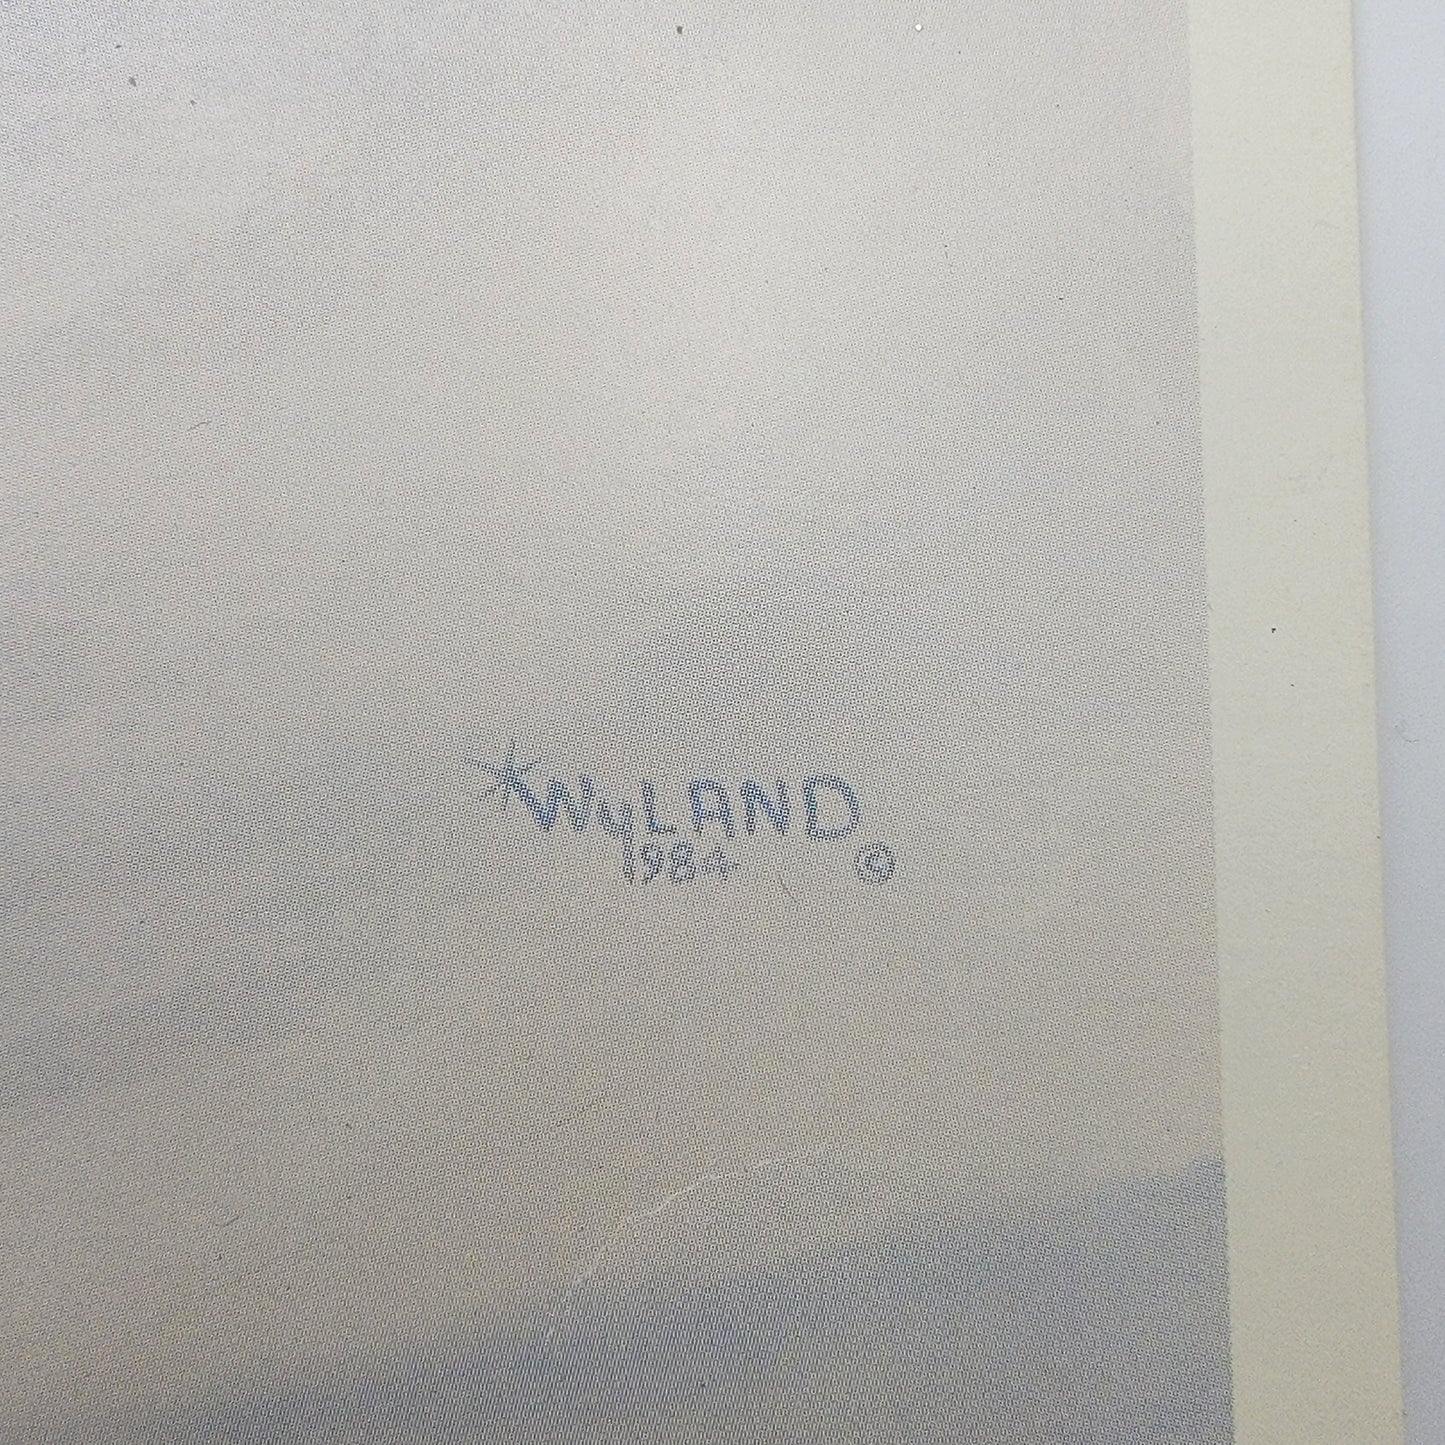 1984 Wyland Print - White Seal